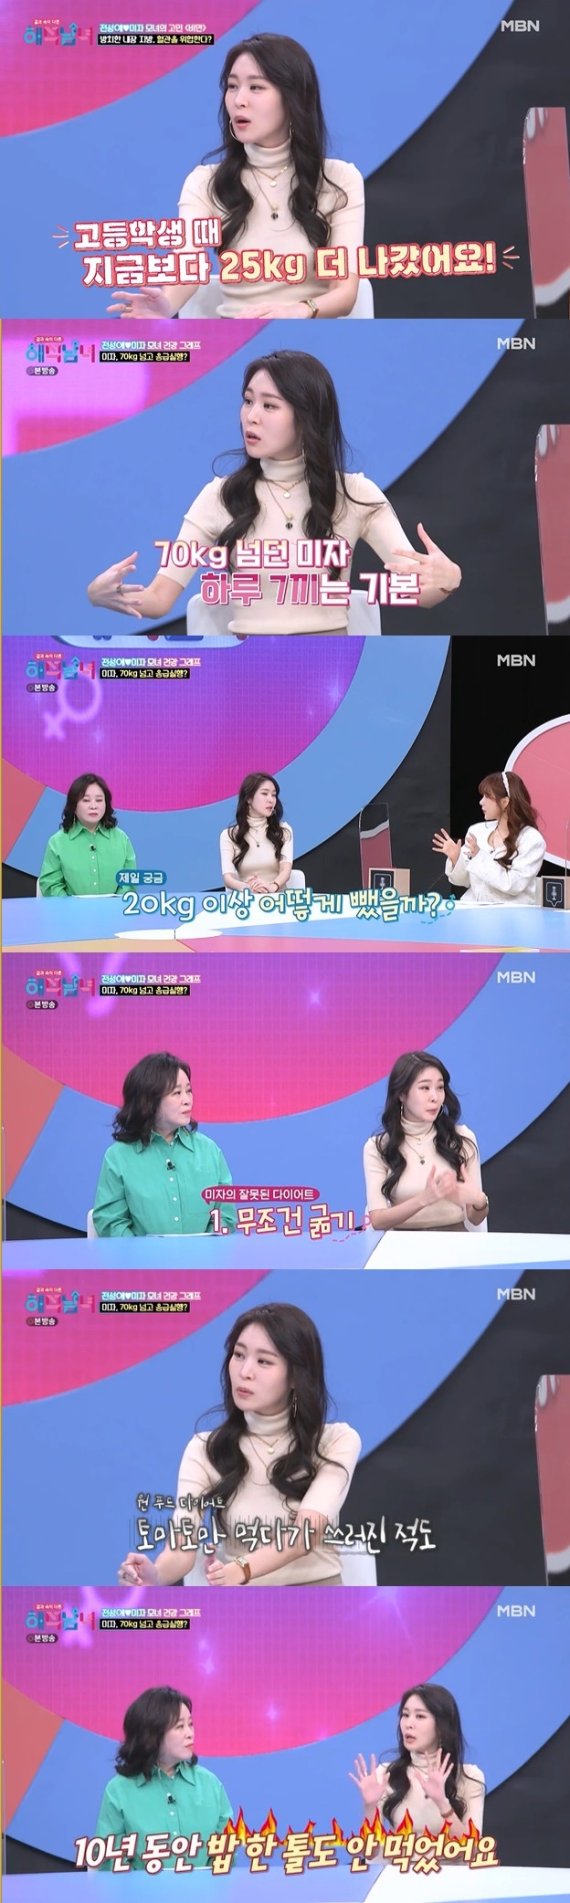 MBN '겉과 속이 다른 해석남녀' 방송 화면 캡처 © 뉴스1